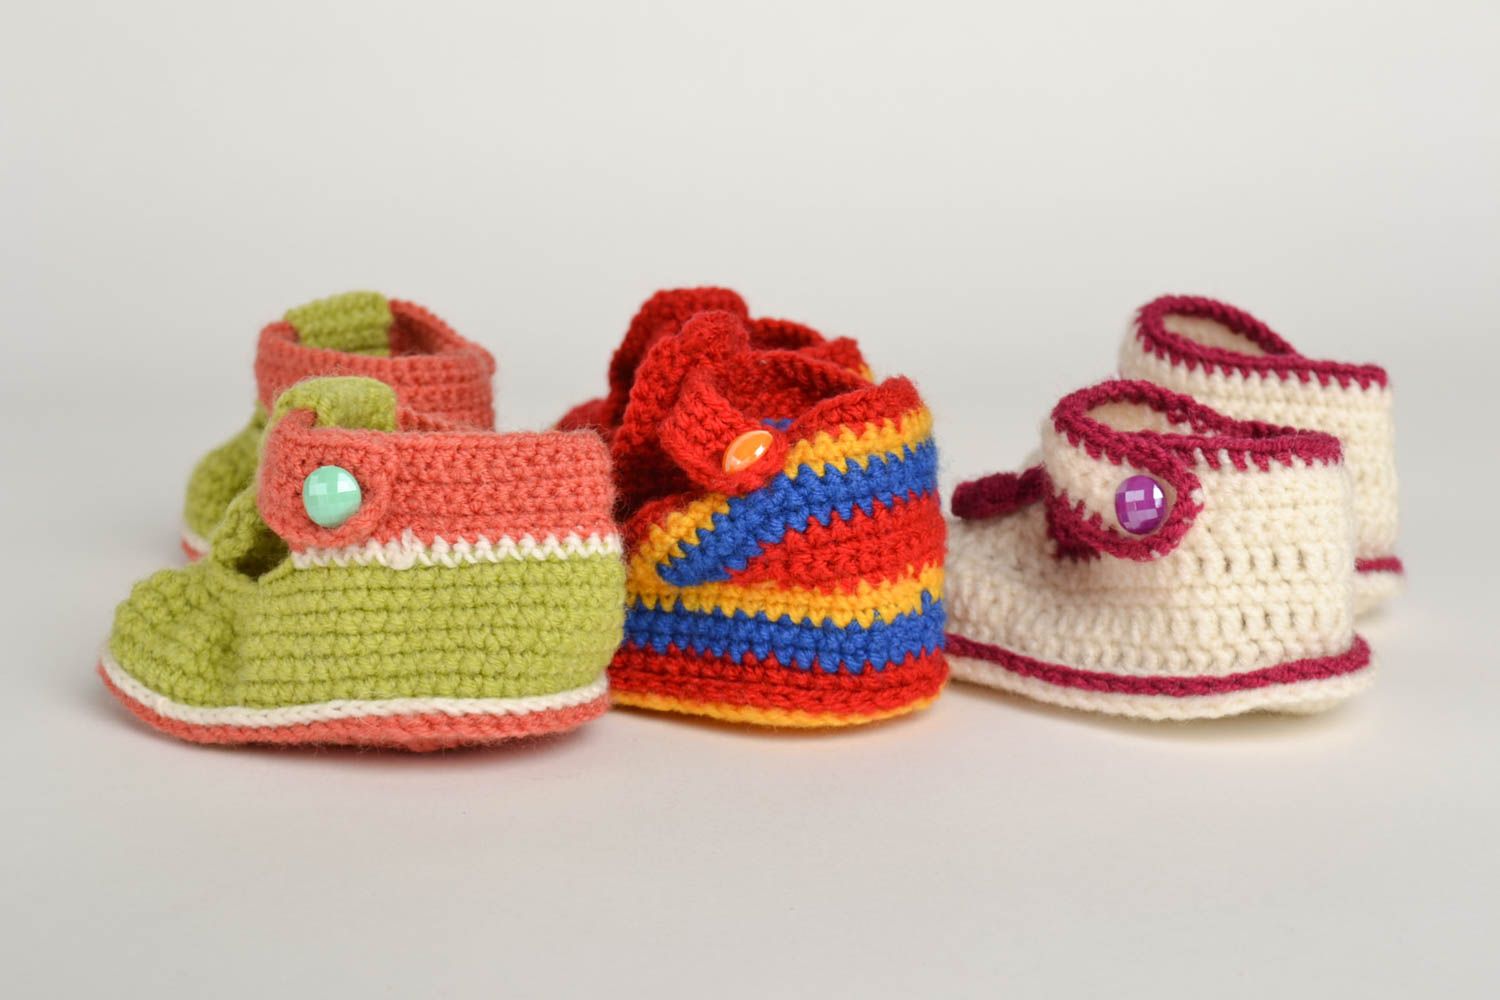 Beautiful handmade baby bootees crochet baby booties fashion kids small gifts photo 4